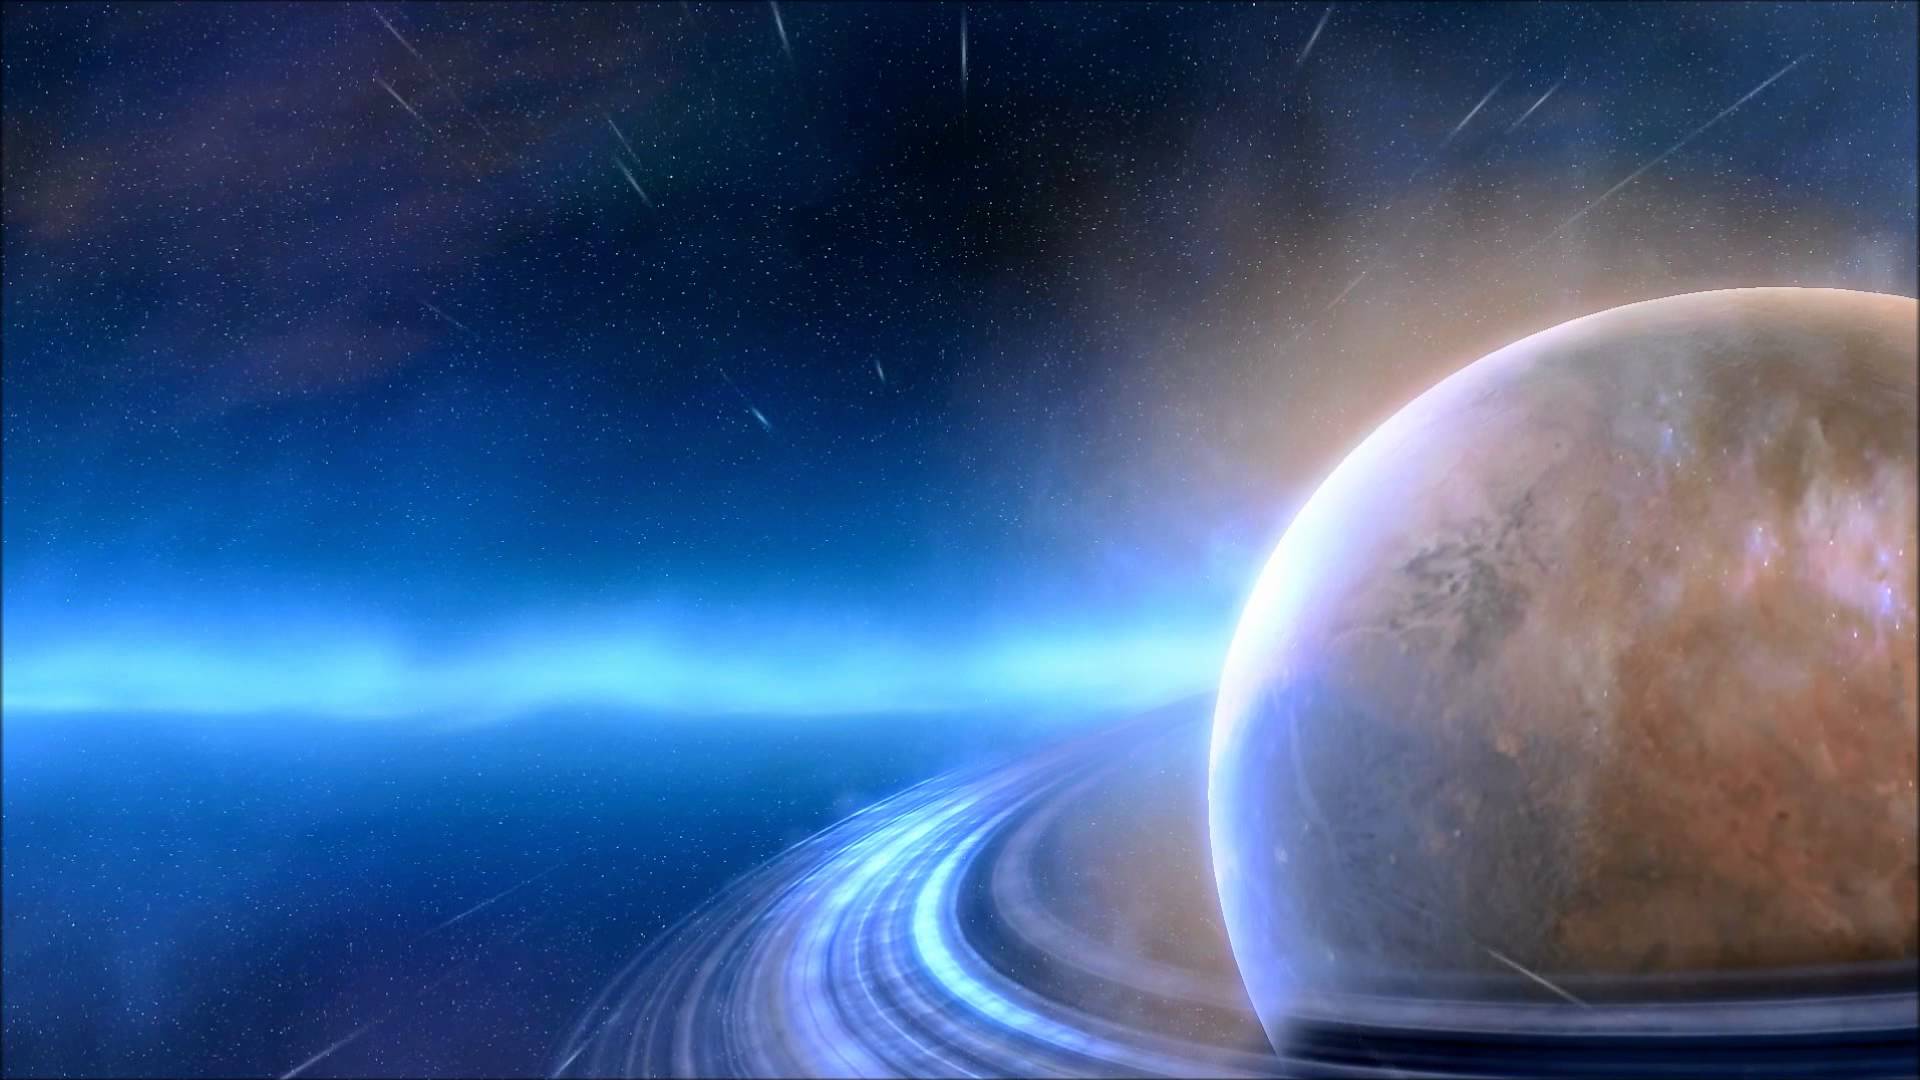 StarCraft 2 DreamScene 1080p - YouTube